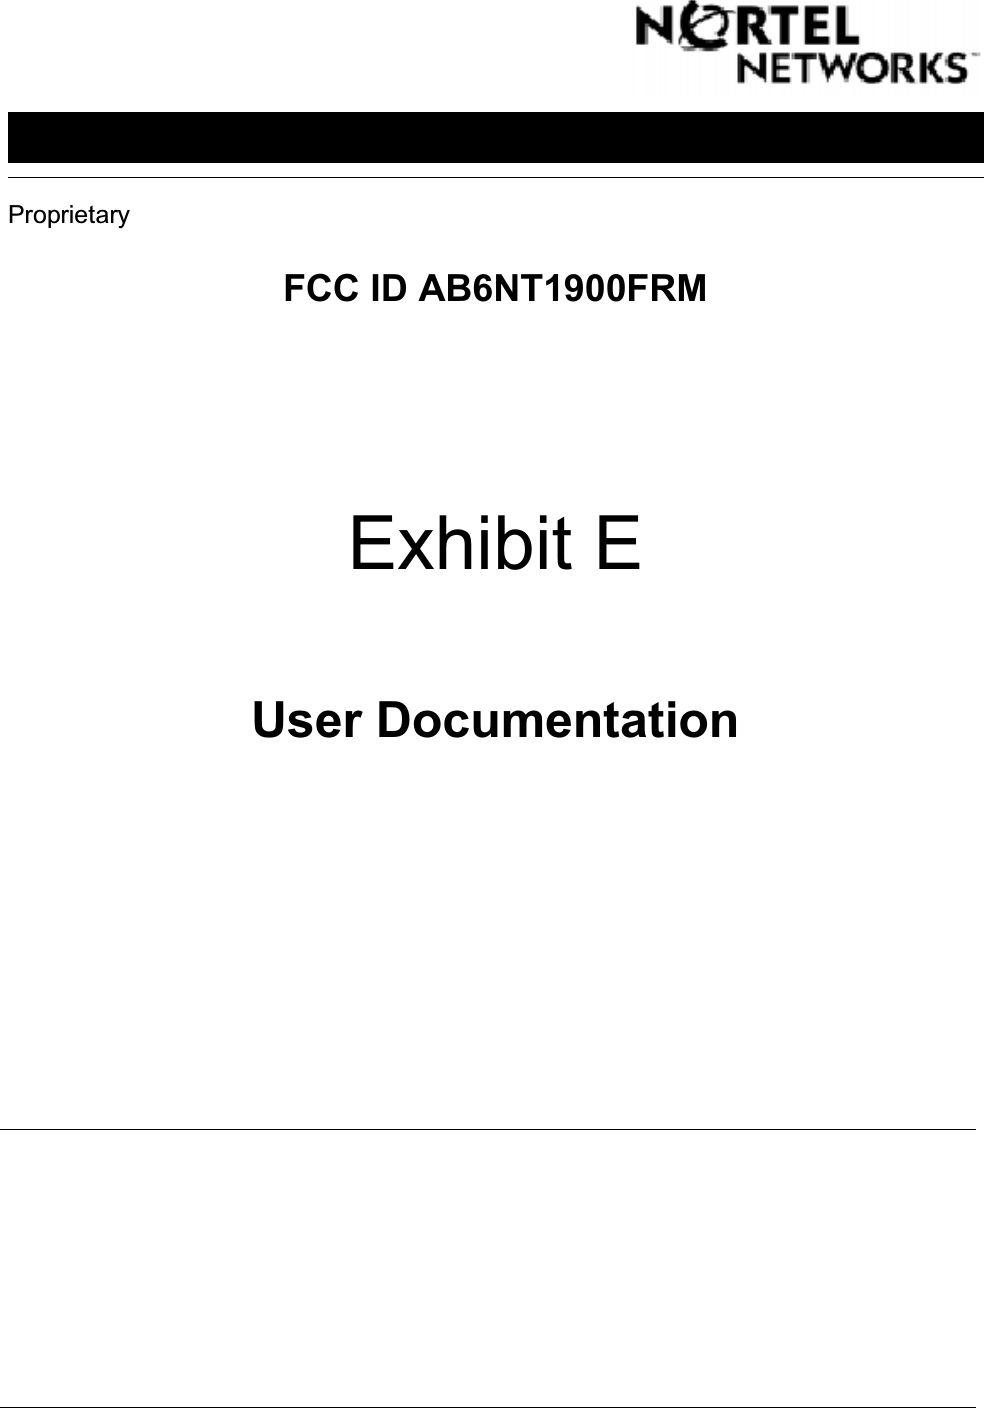 ProprietaryFCC ID AB6NT1900FRMExhibit EUser Documentation